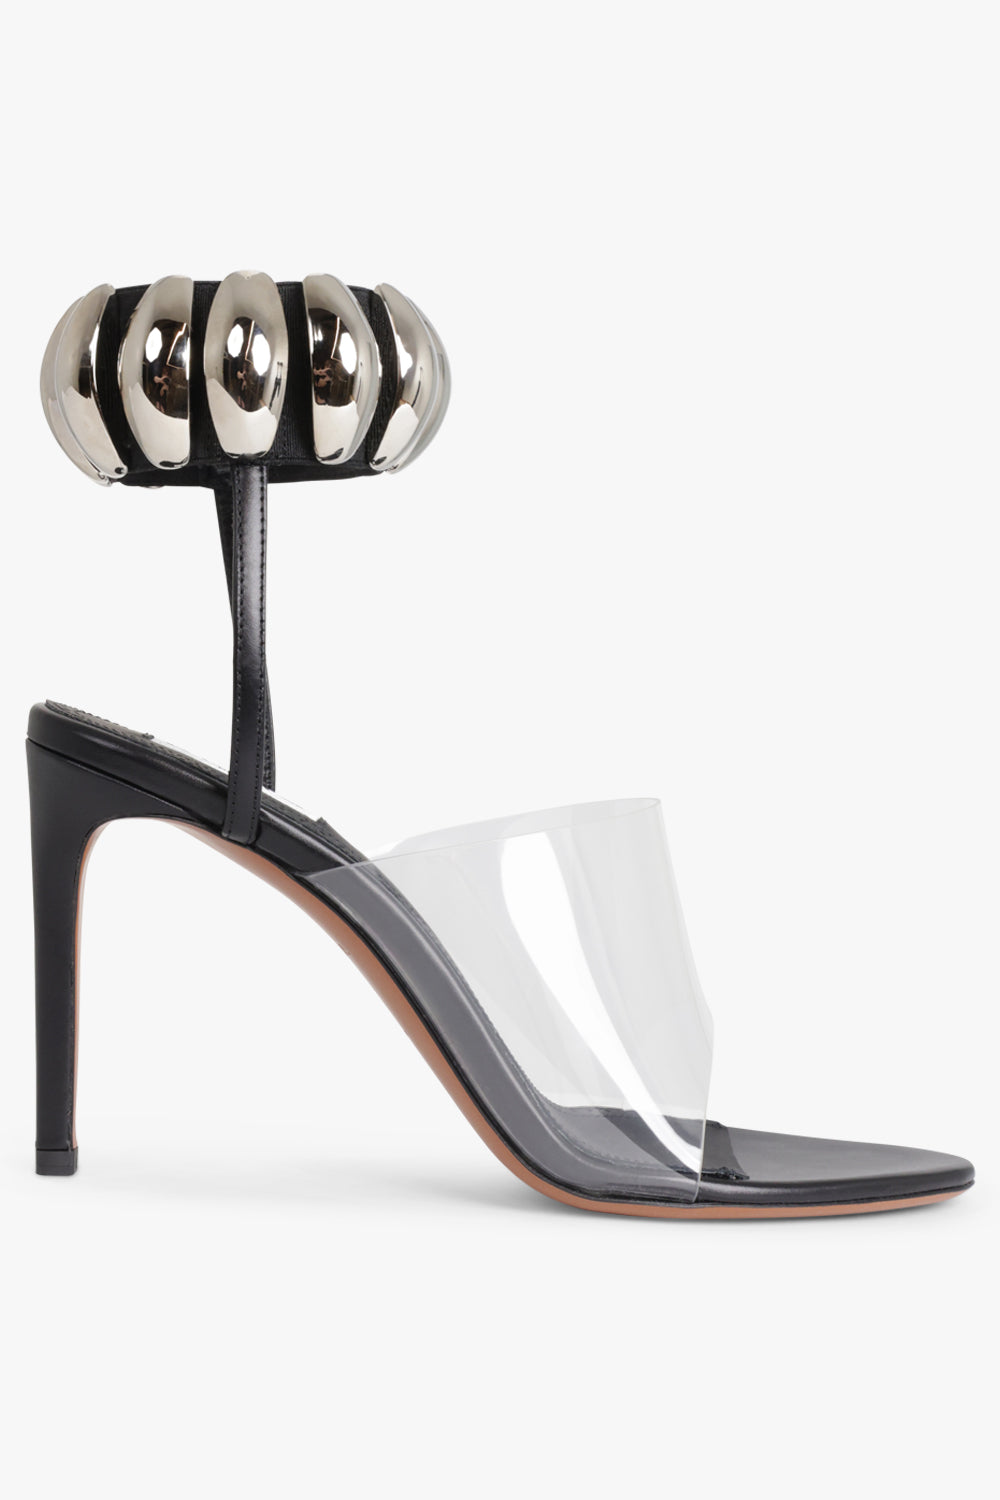 ALAIA SHOES Heeled Sandals 90Mm | Black